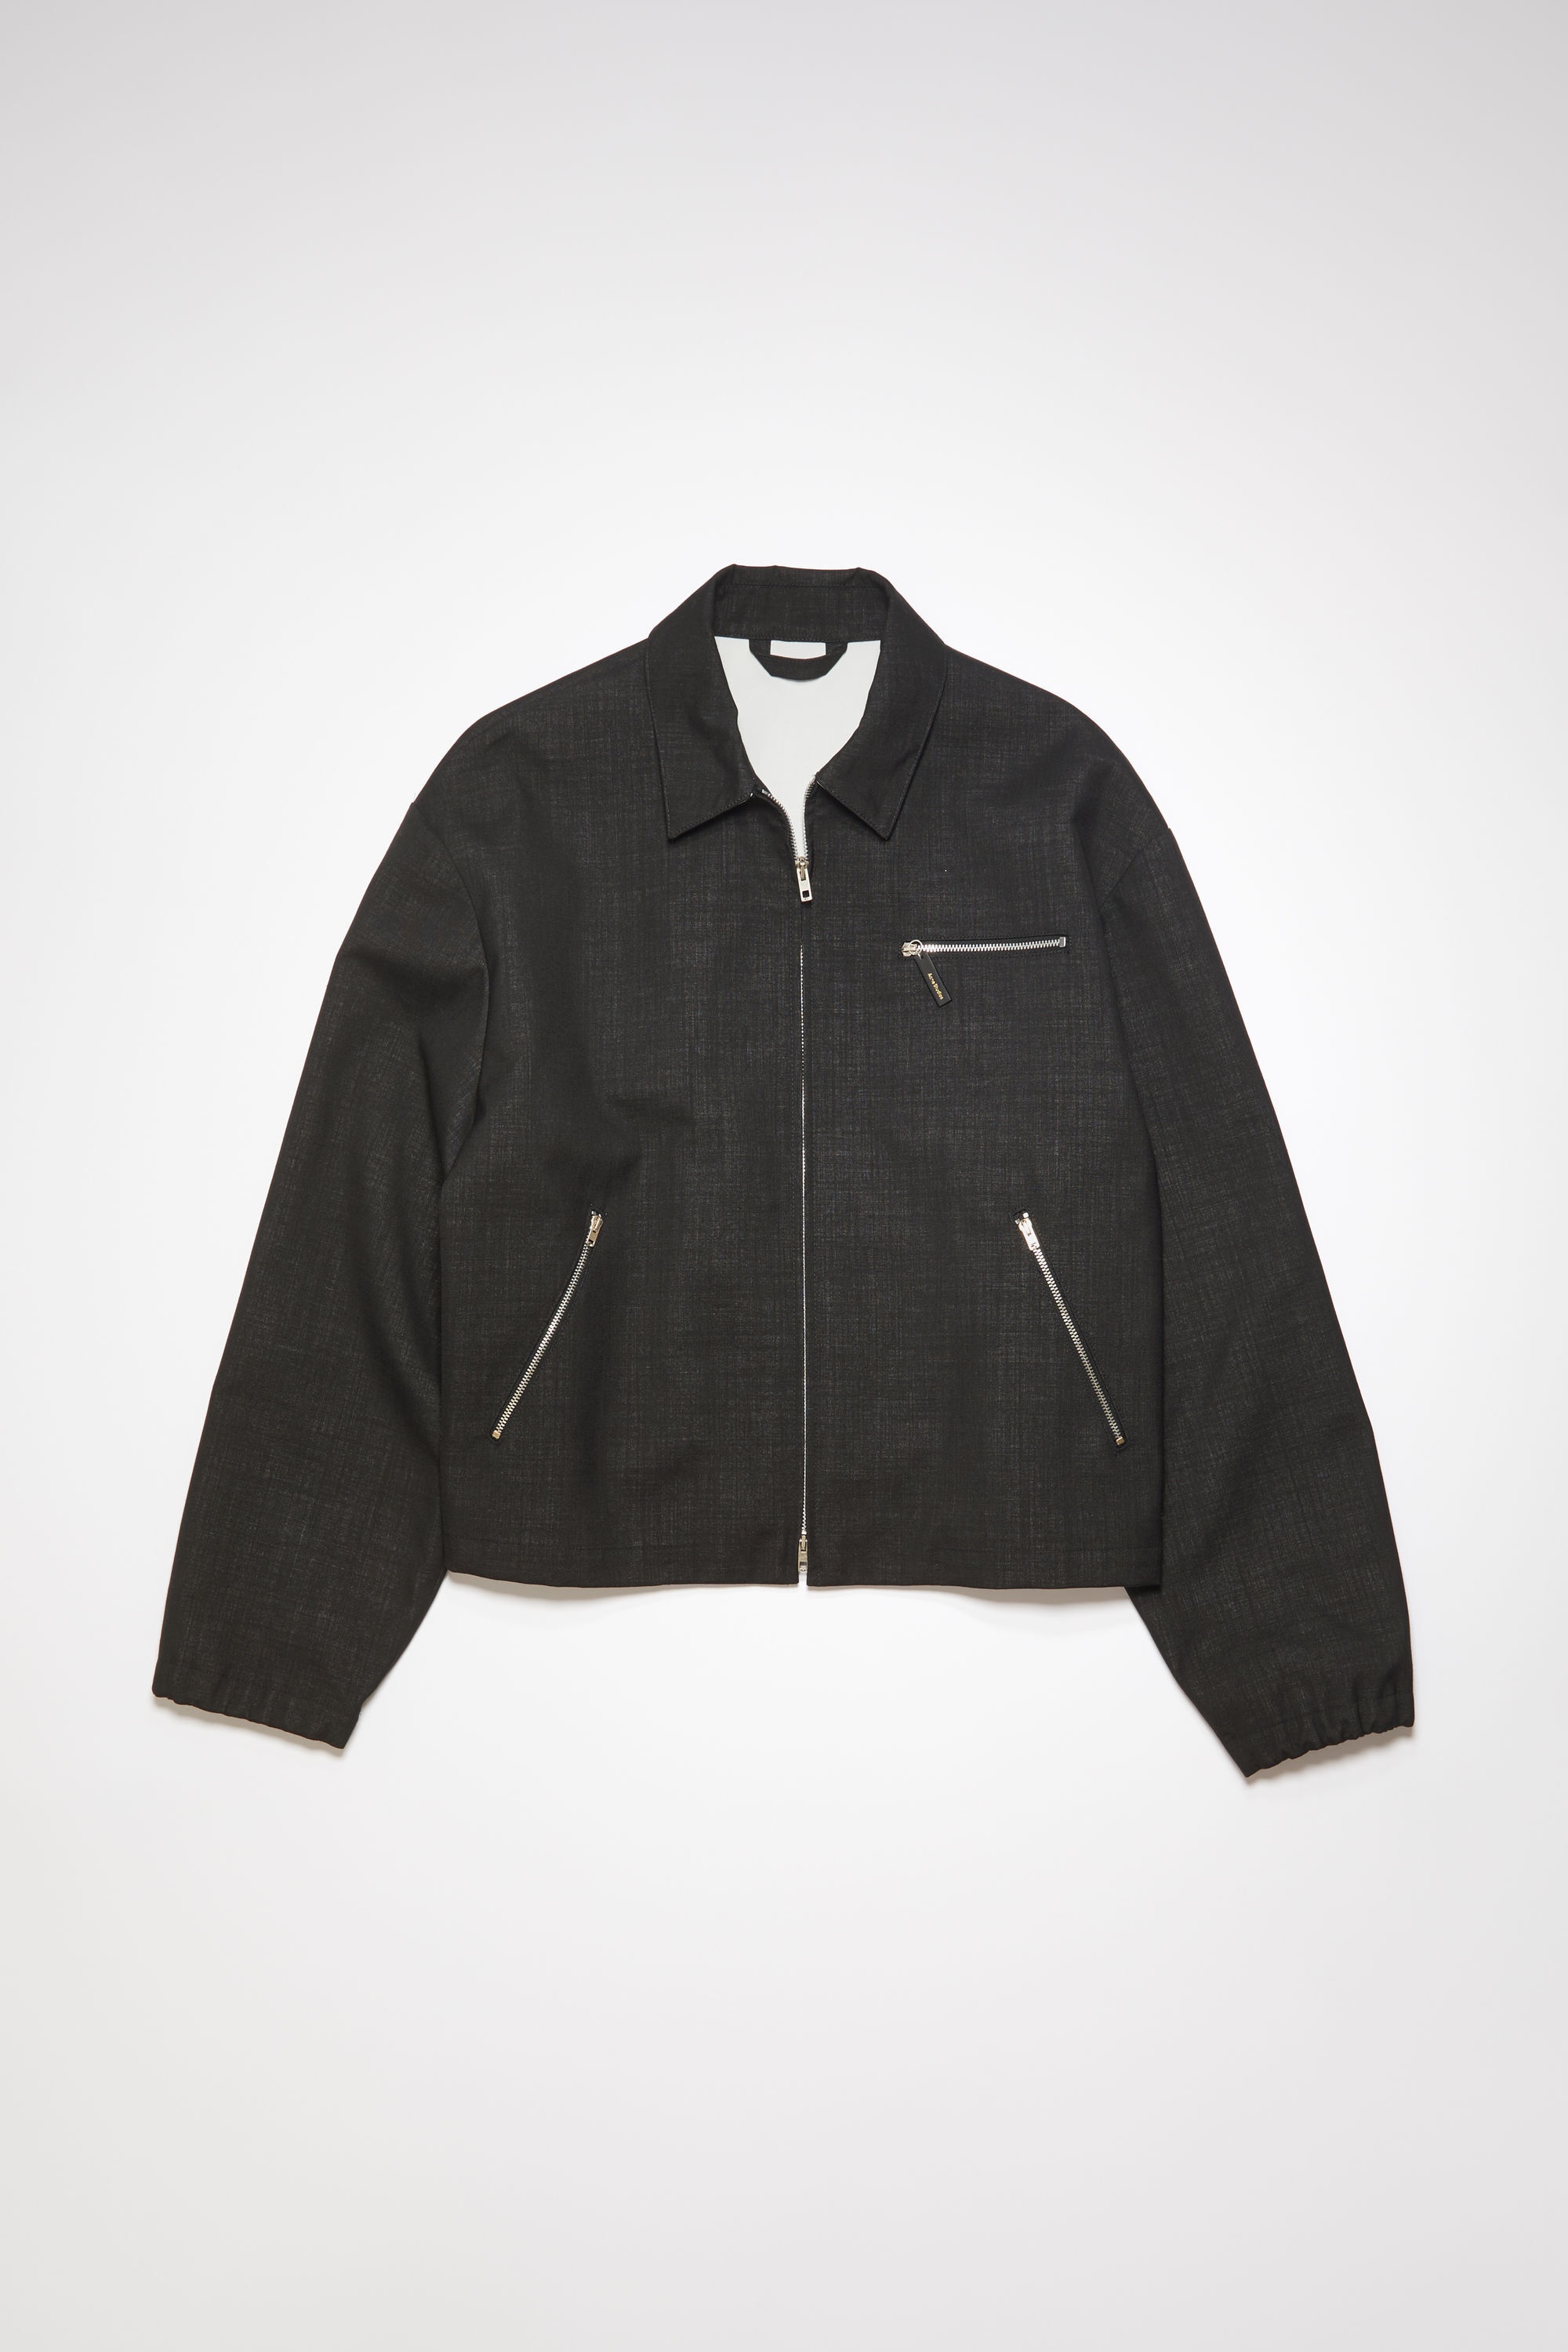 Acne Studios Zippered jacket - Black/white | REVERSIBLE